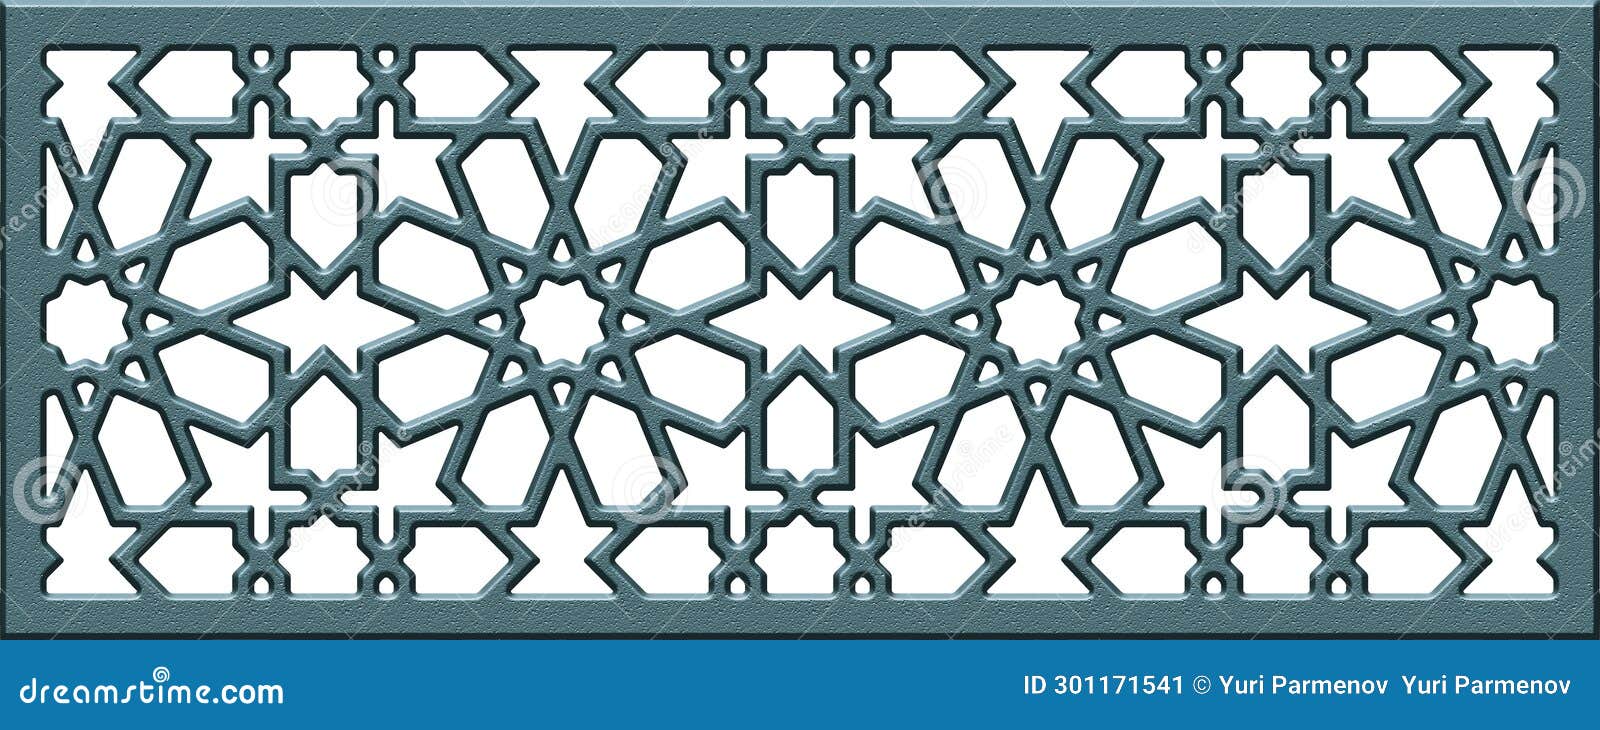 decorative arabesque wall panel, mashrabiya metal casting. mosque decoration metal grating. authentic arabian style. 